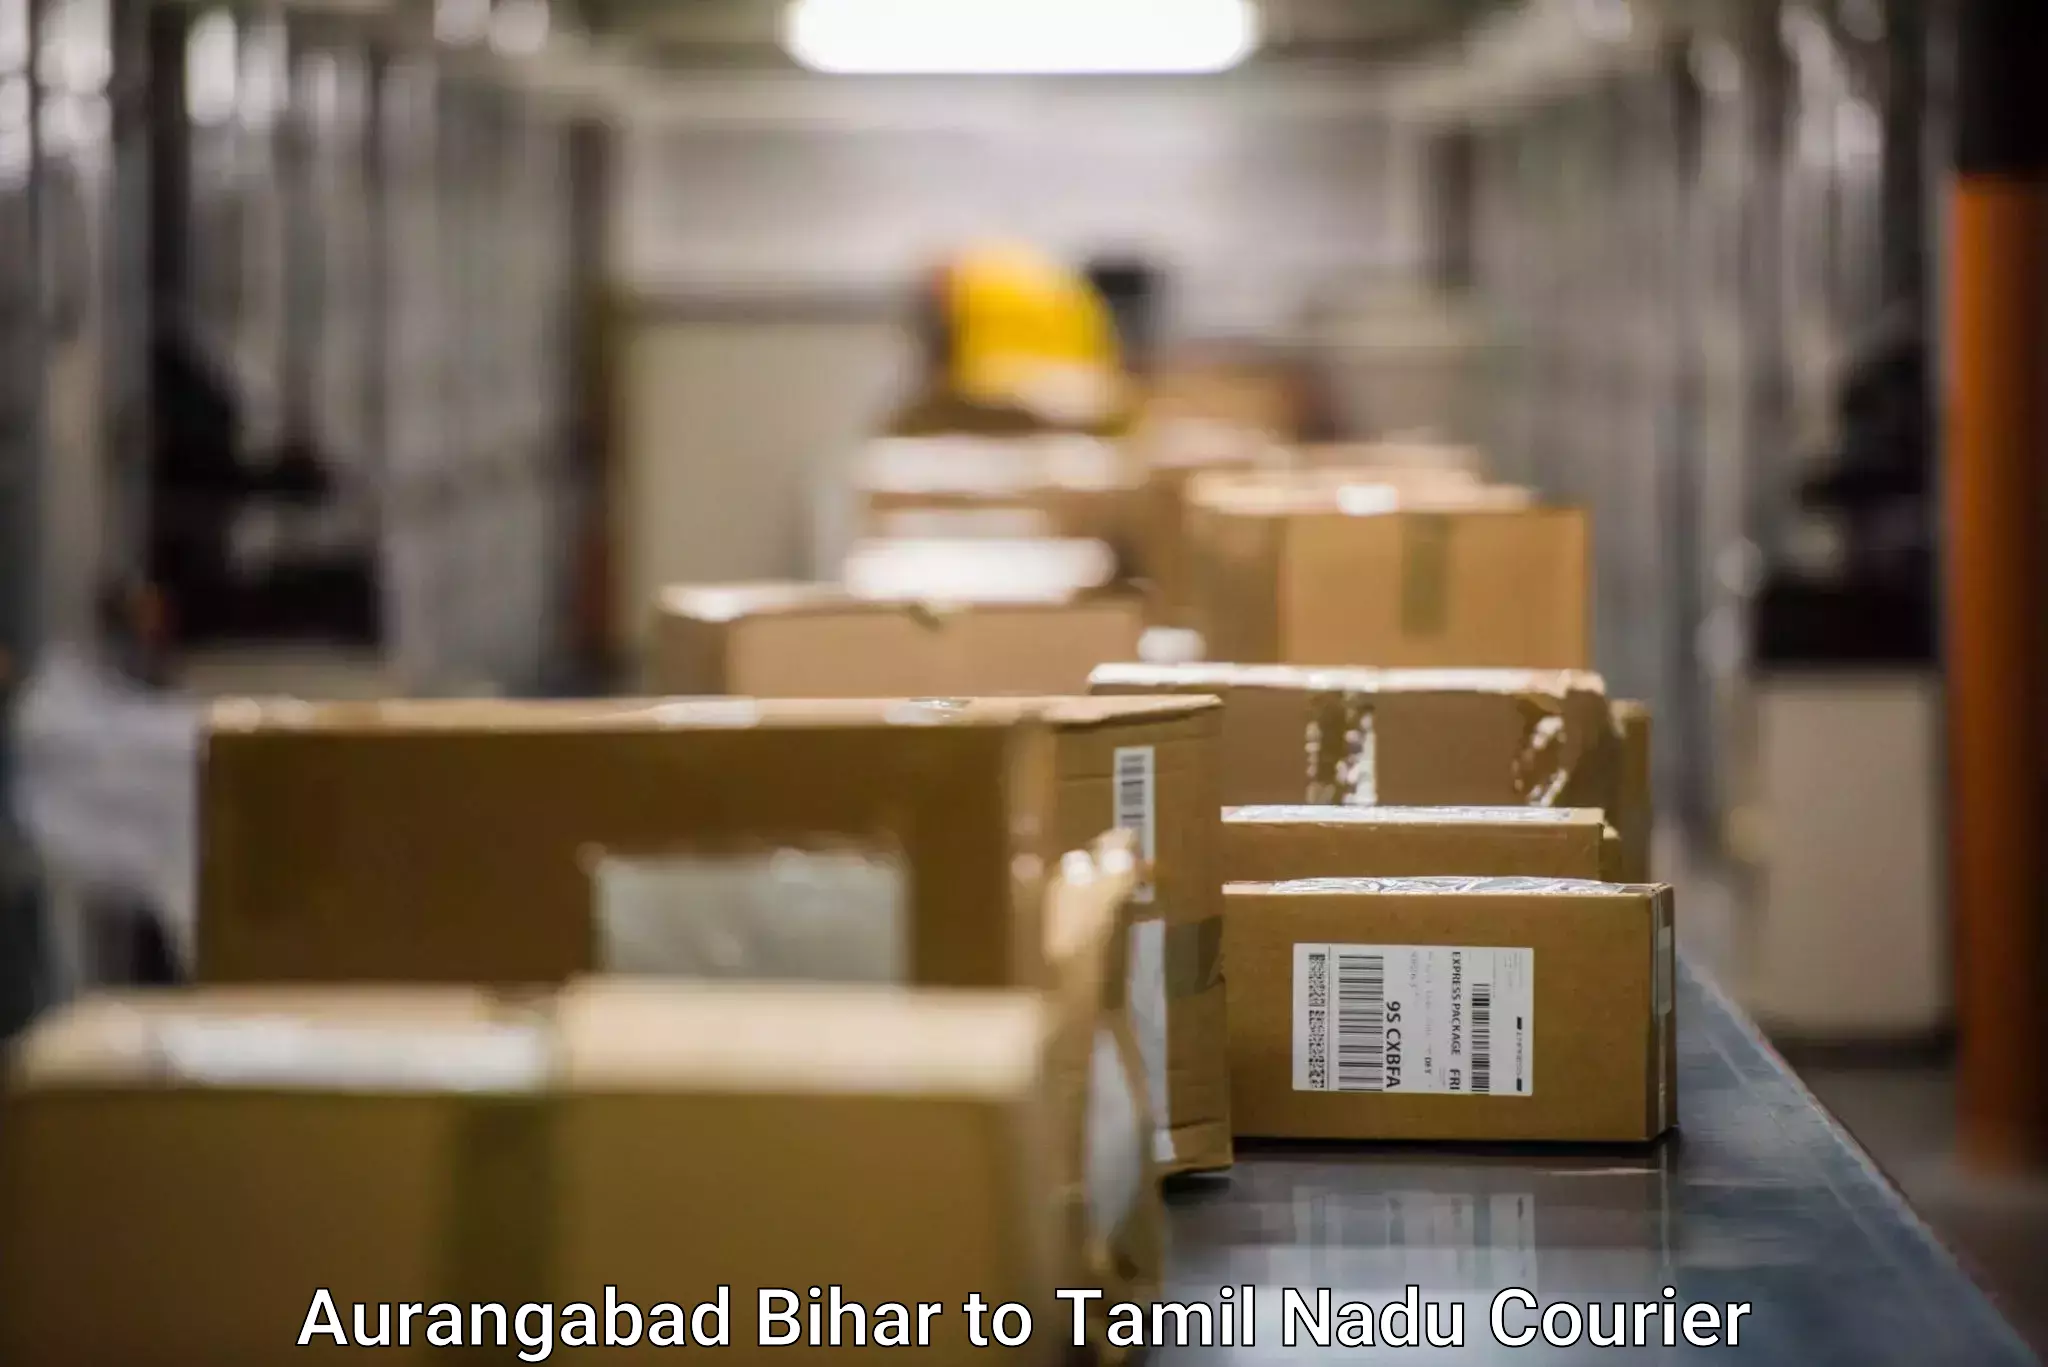 On-demand delivery Aurangabad Bihar to Ayyampettai